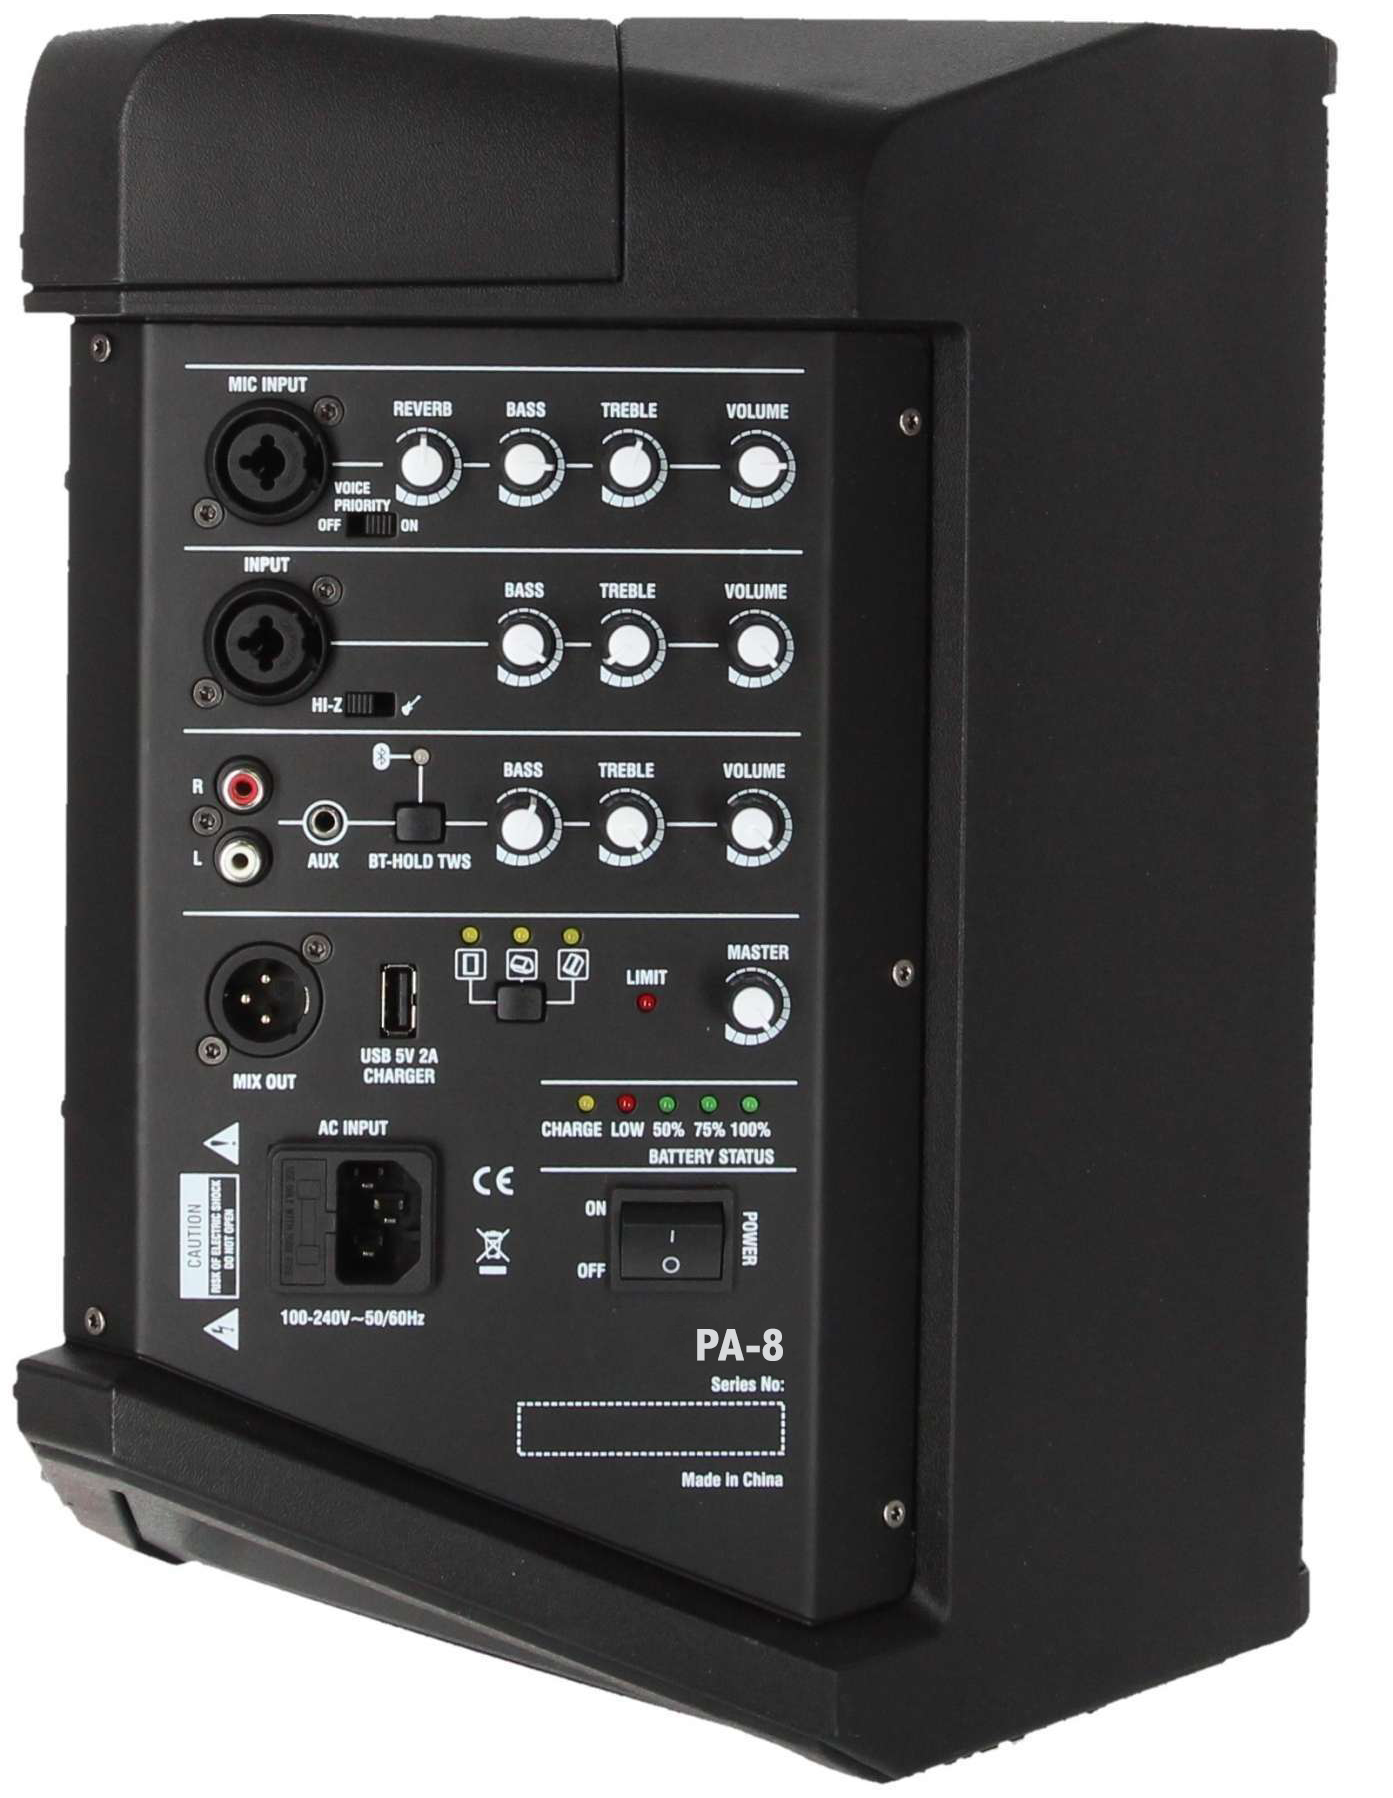 Definitive Audio Atlantis Pa-8 - Portable PA system - Variation 1